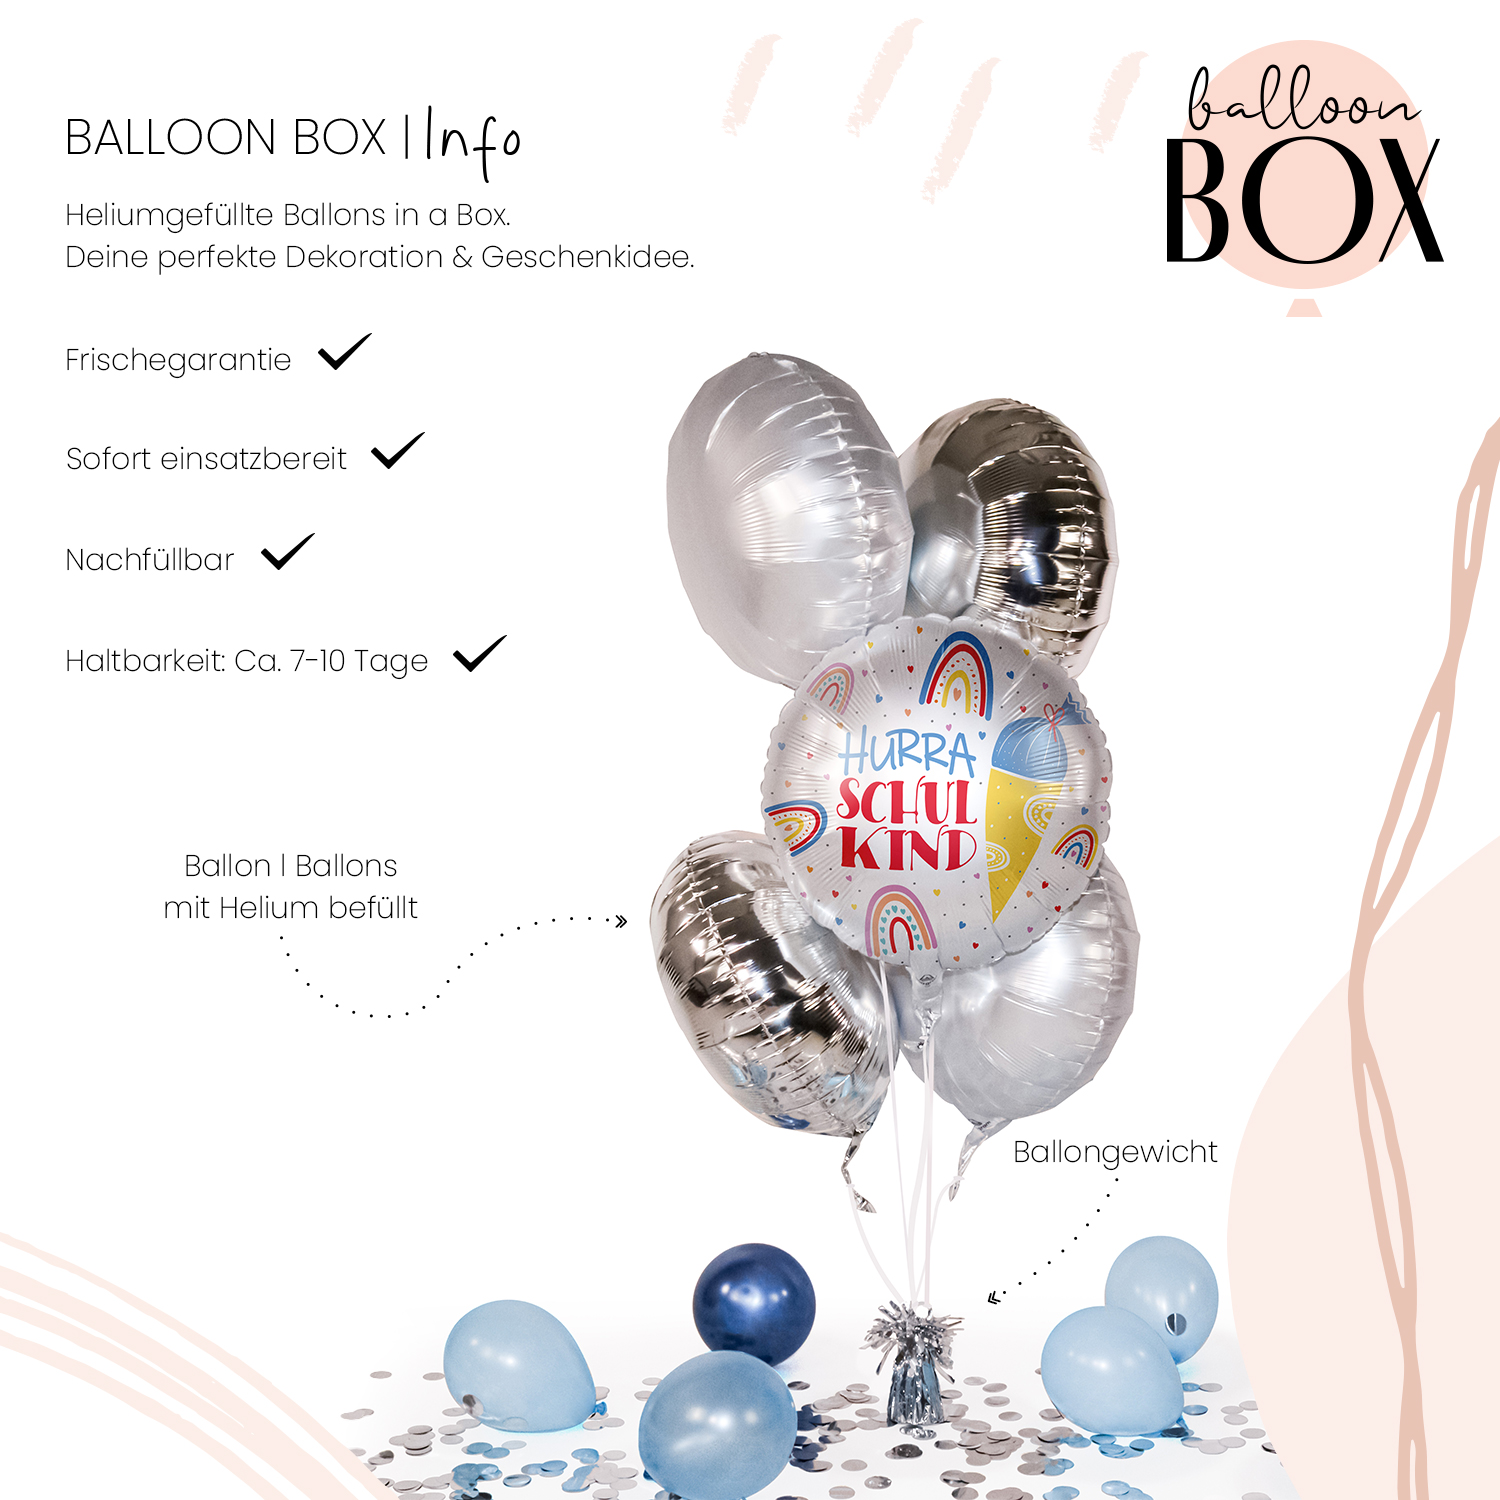 Heliumballon in a Box - Happy School